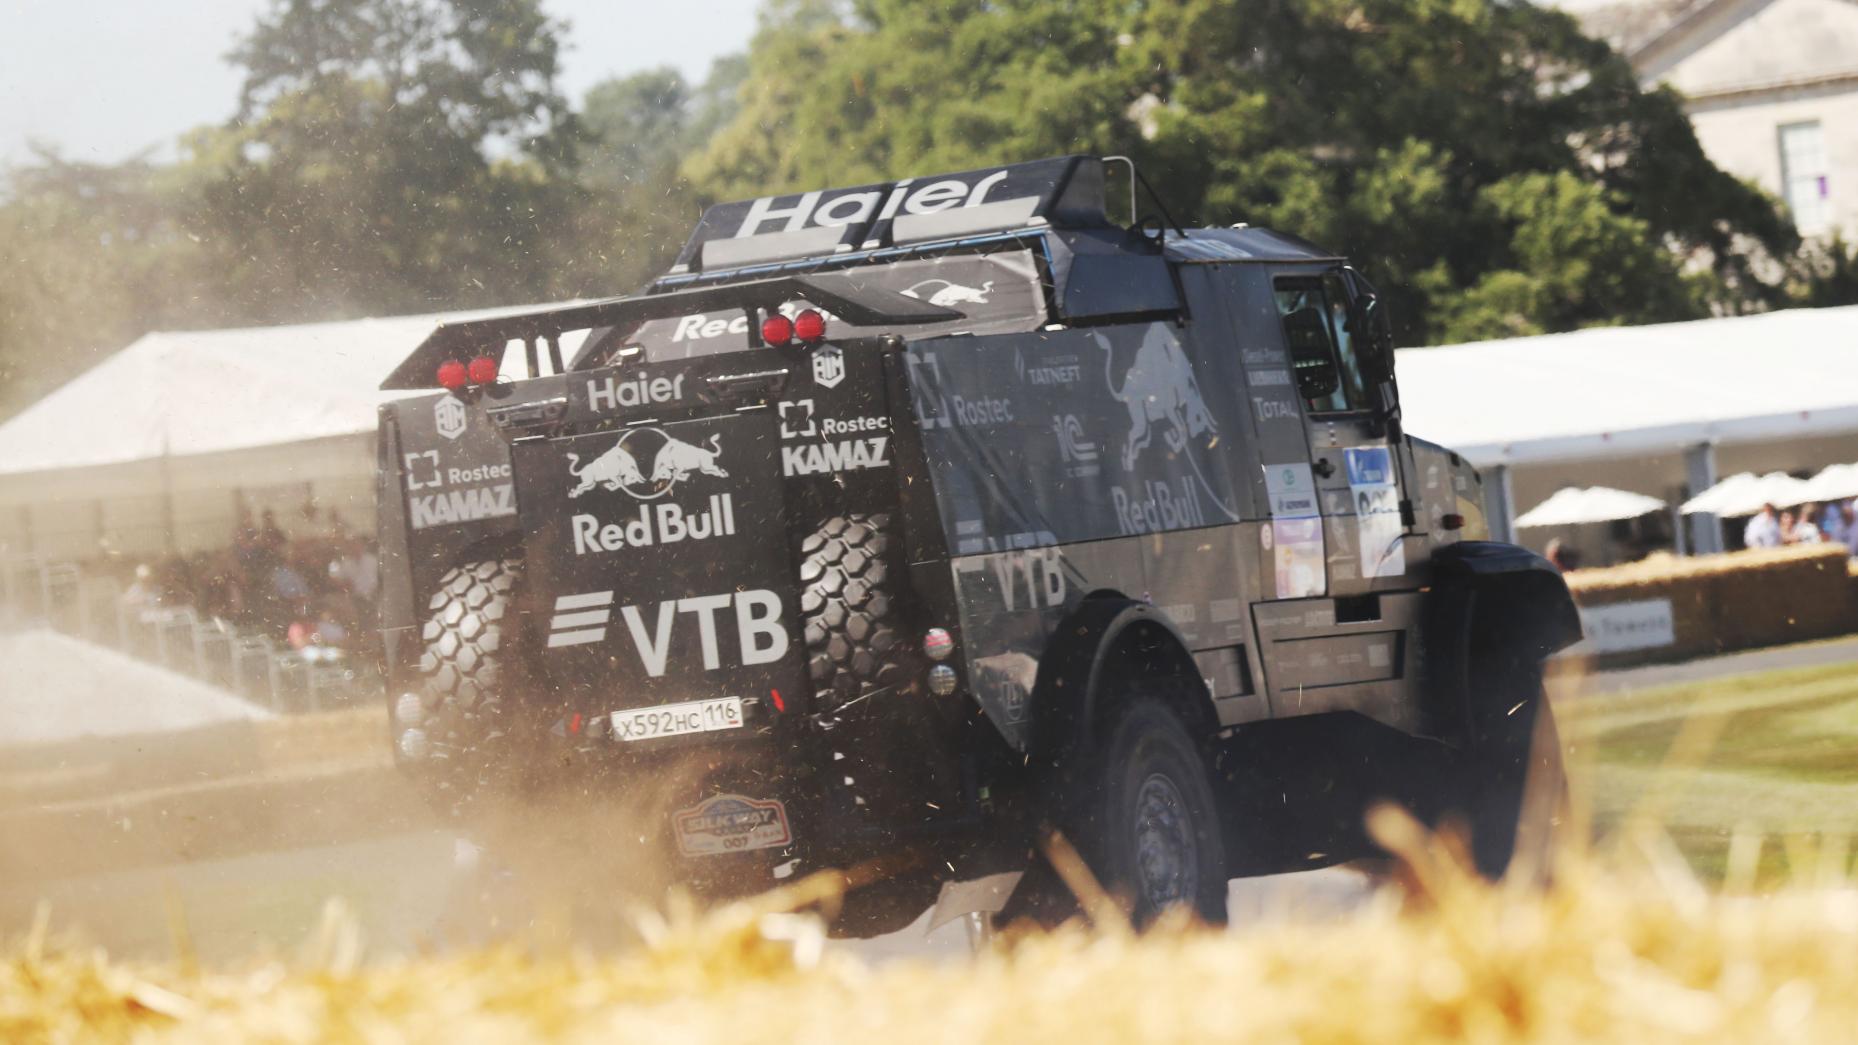 3. A 1,000bhp, 10-tonne Kamaz Dakar truck